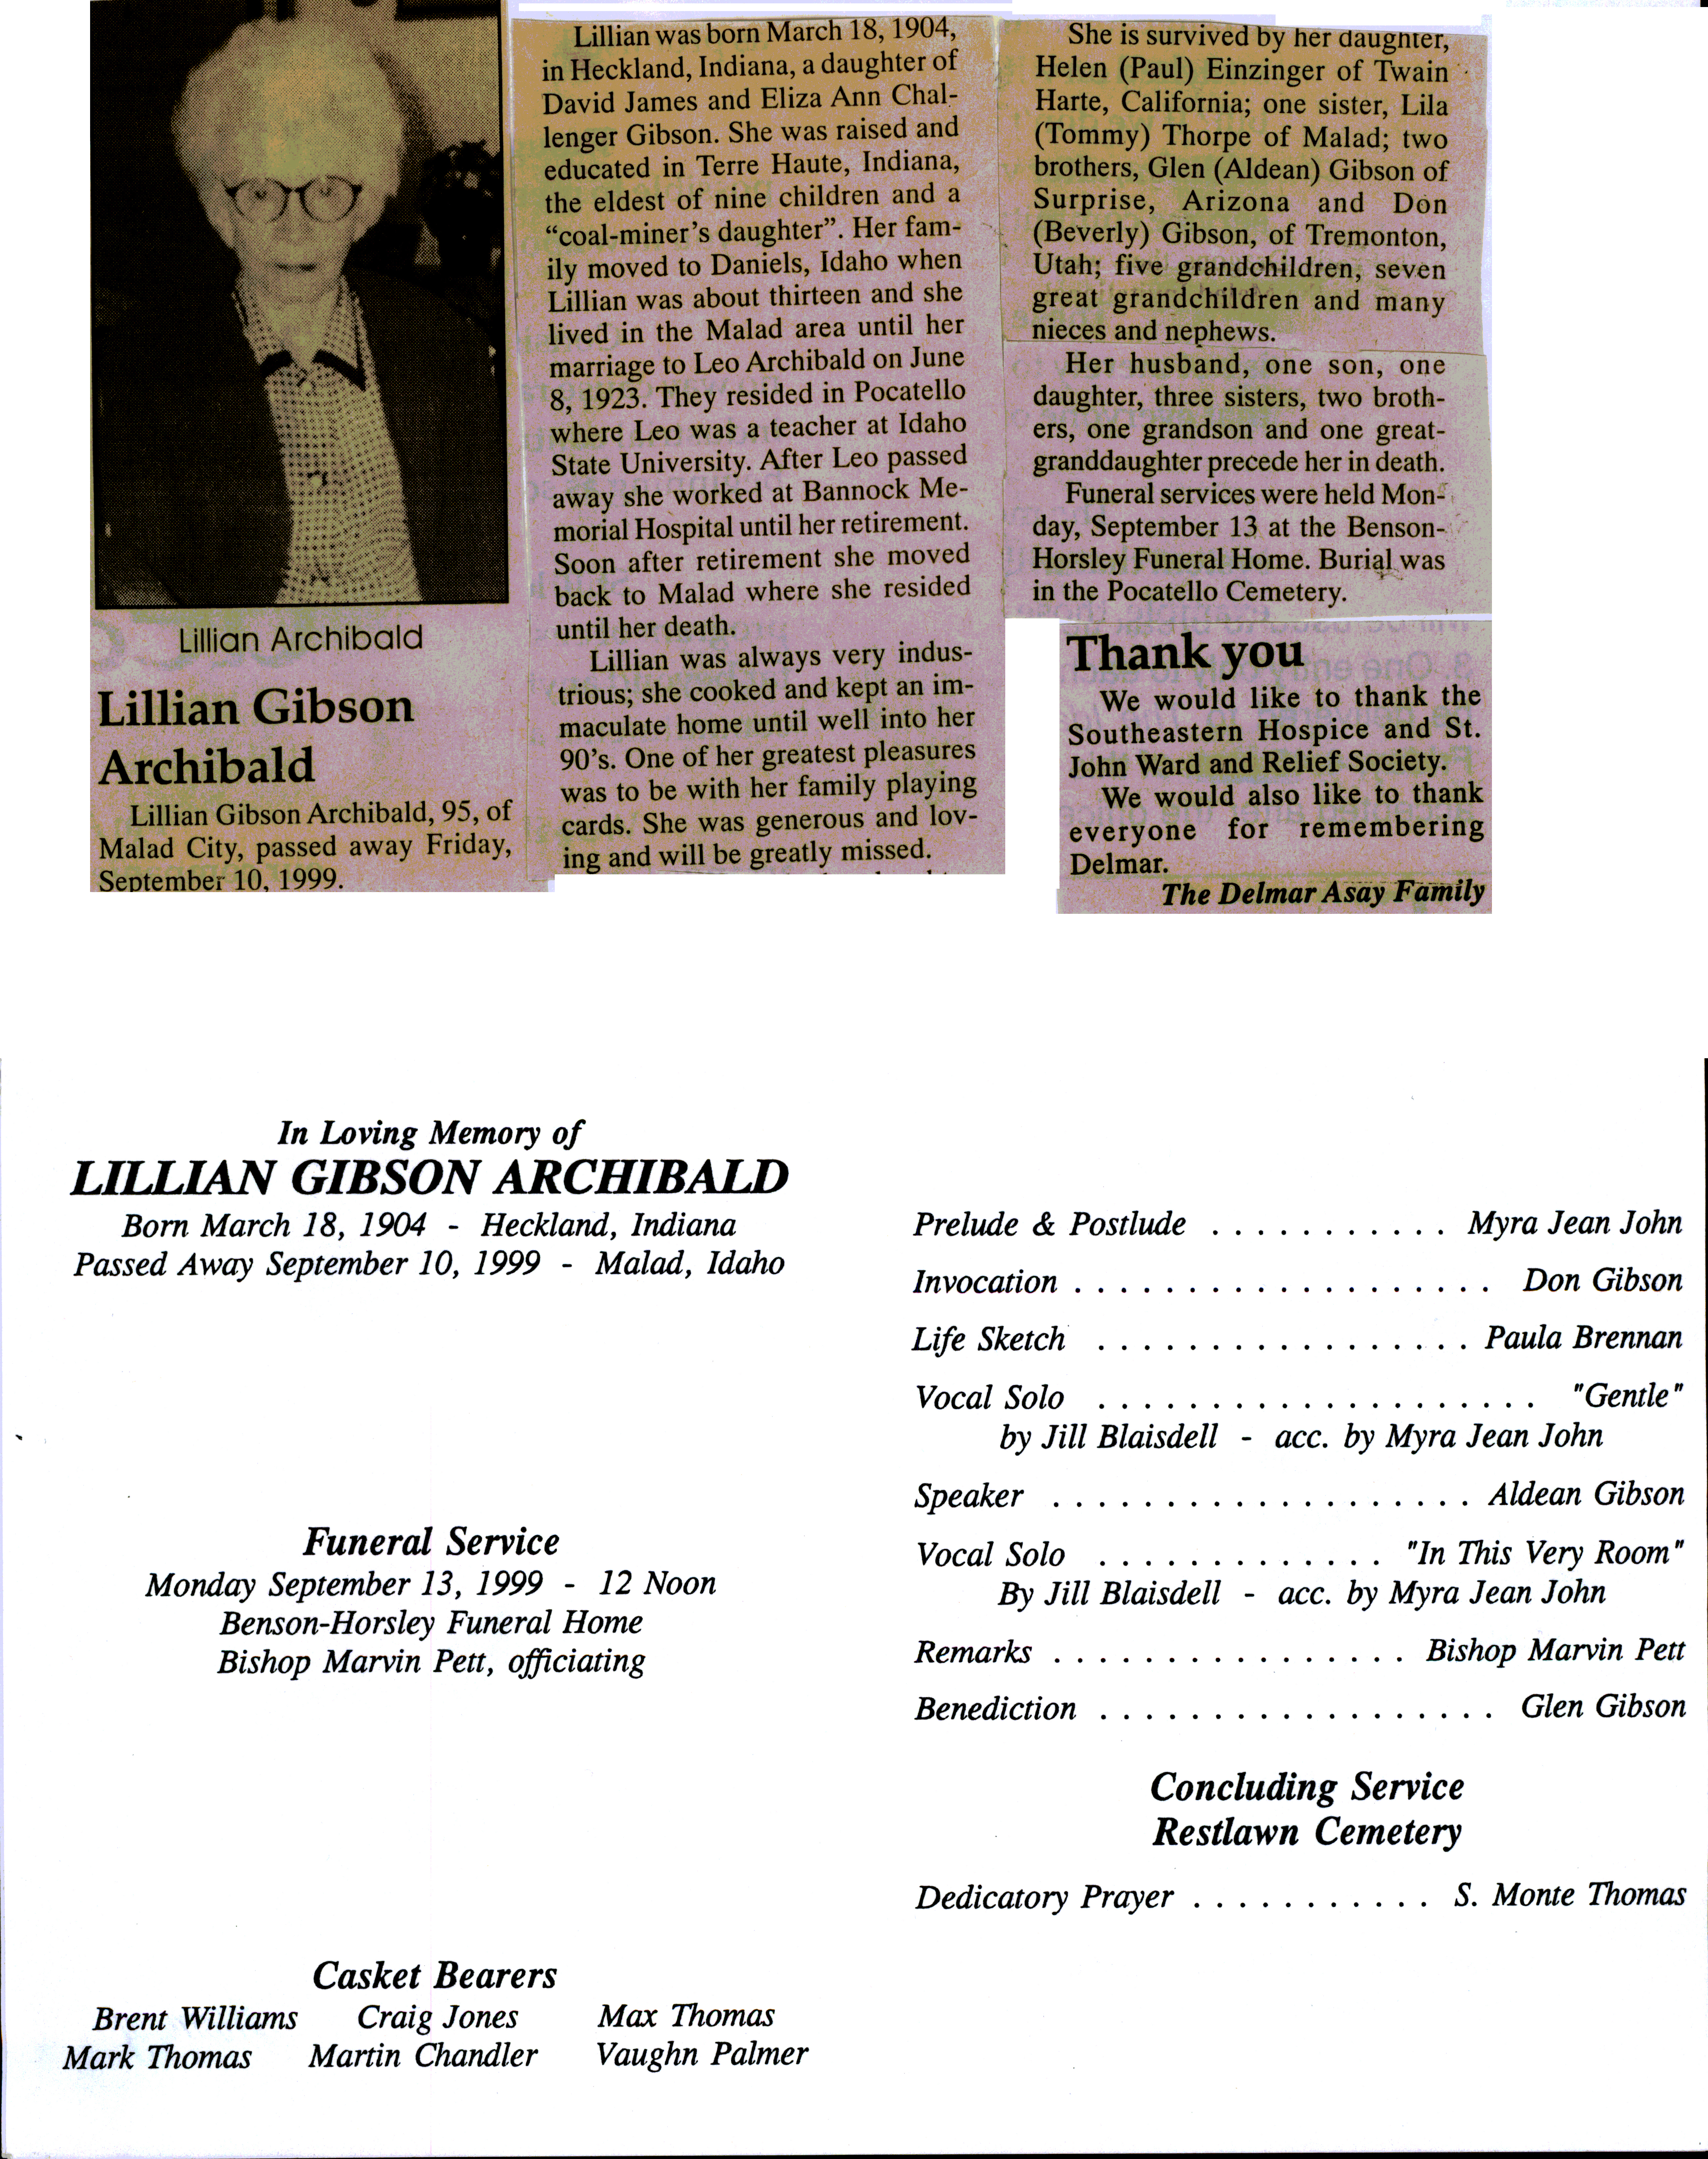 Lillian Gibson Archibald obit and program